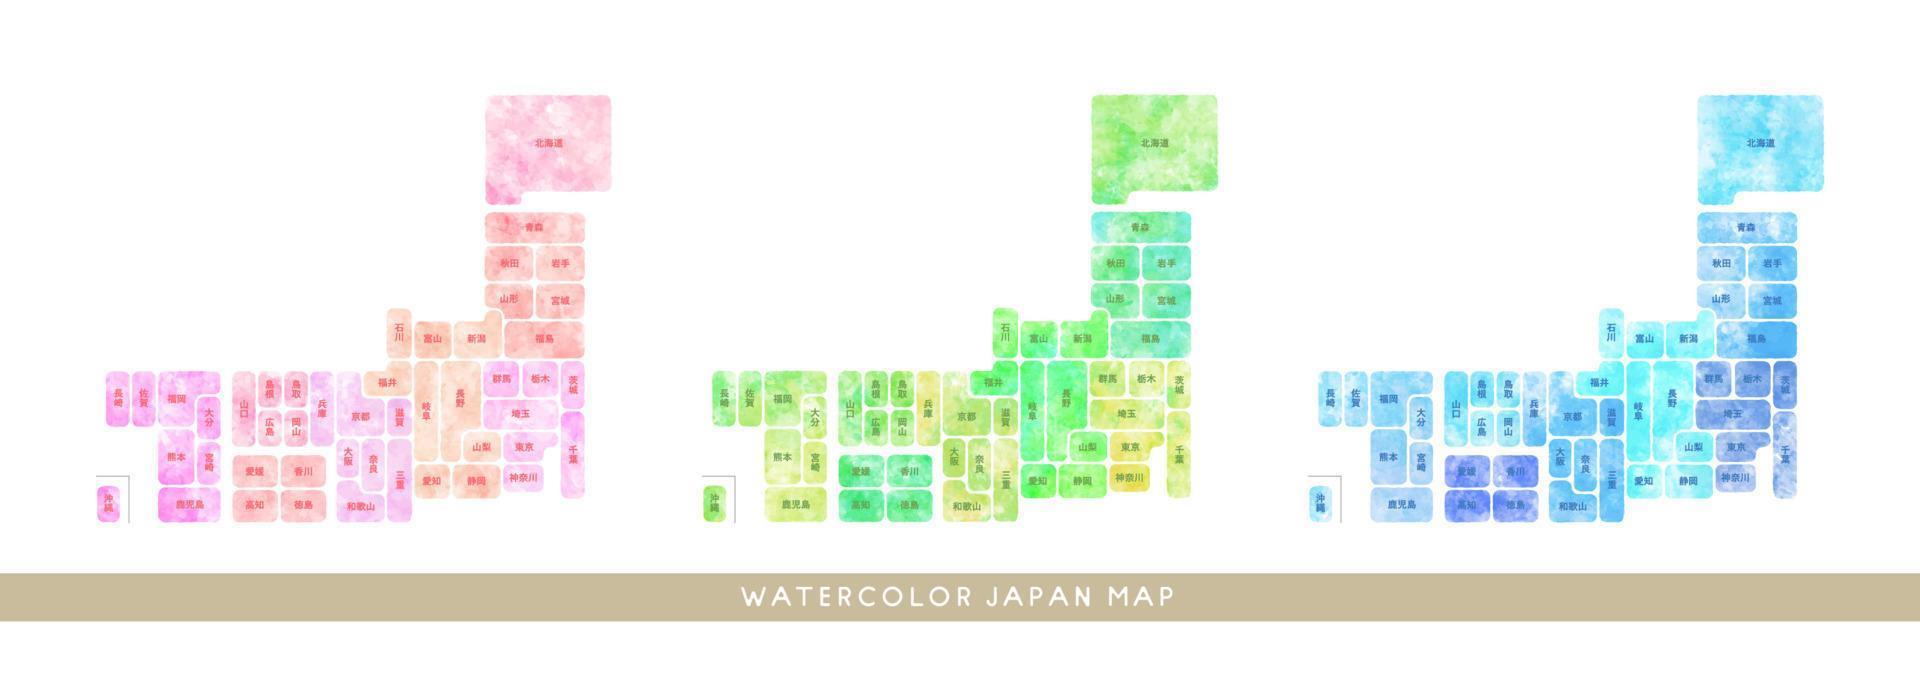 Watercolor map of Japan vector